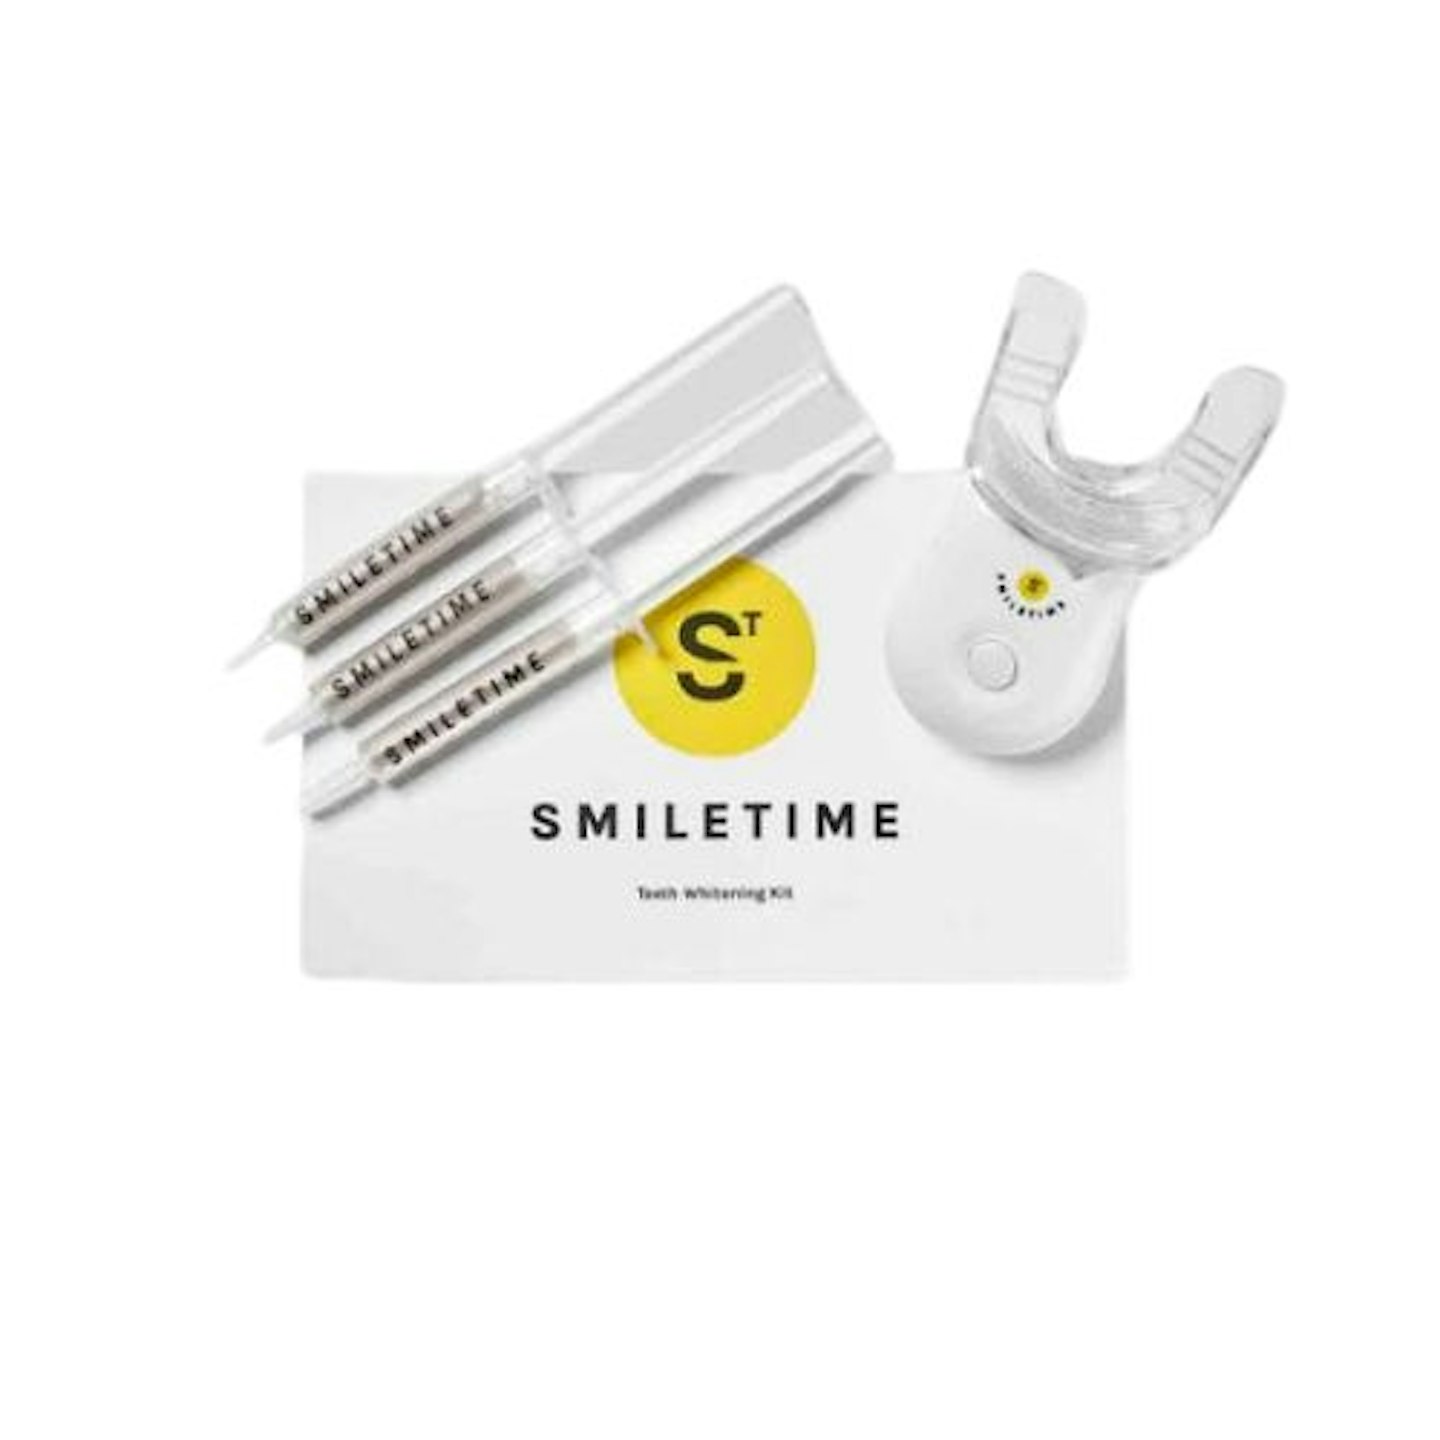 SmileTime Teeth Whitening Kit